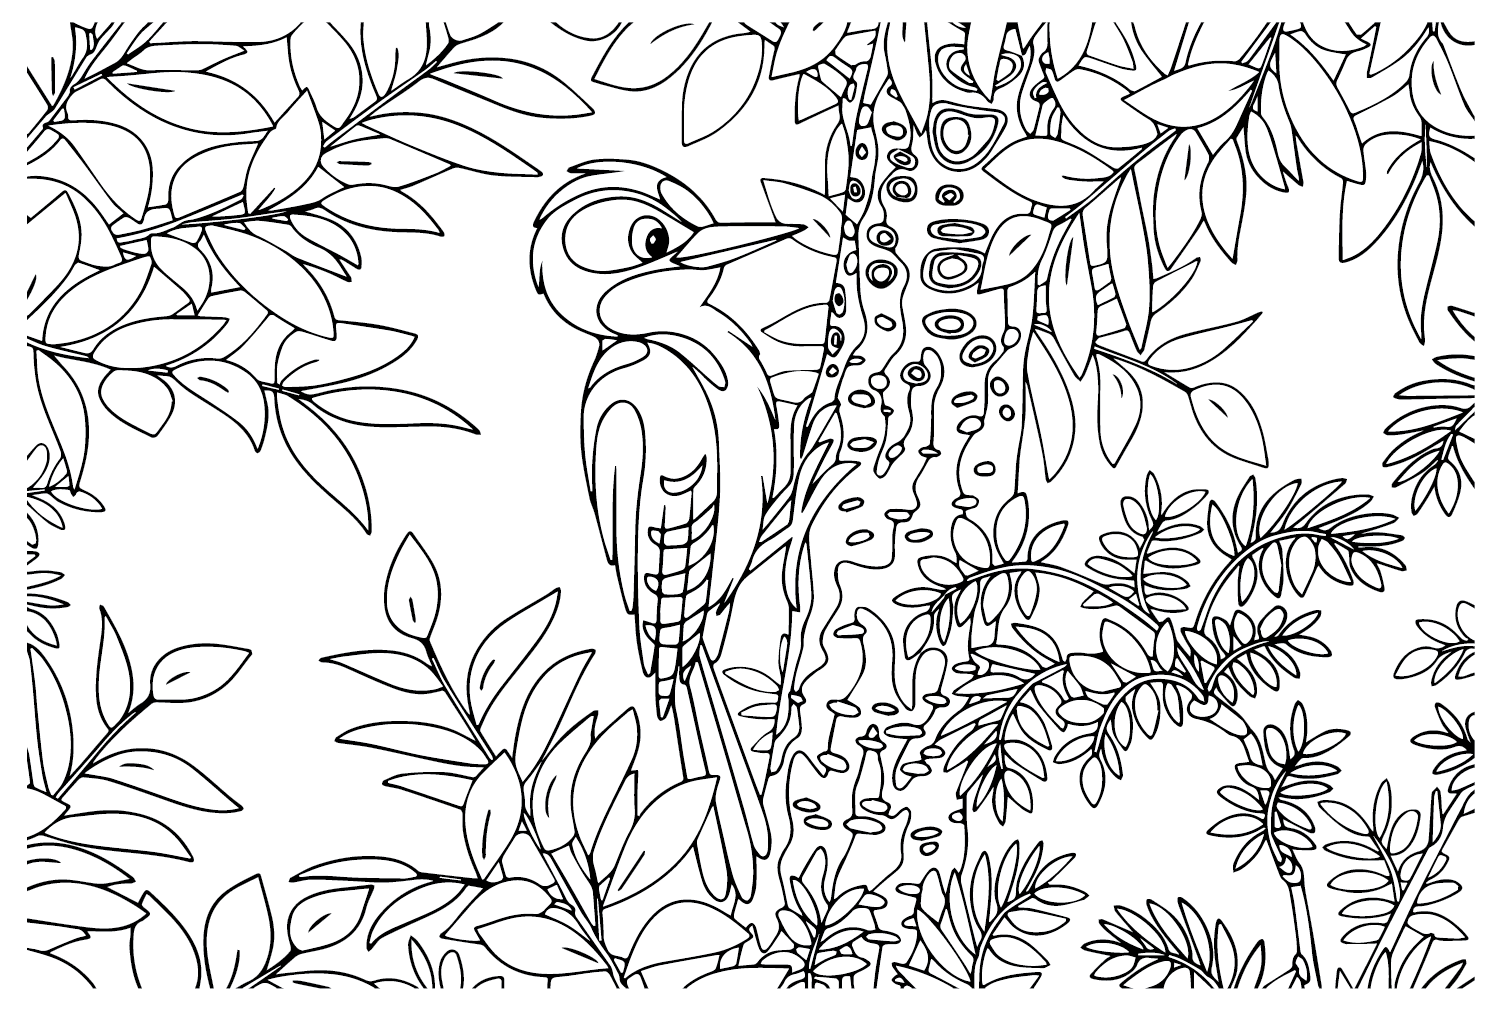 Página colorida do Woody Woodpecker do Woodpecker